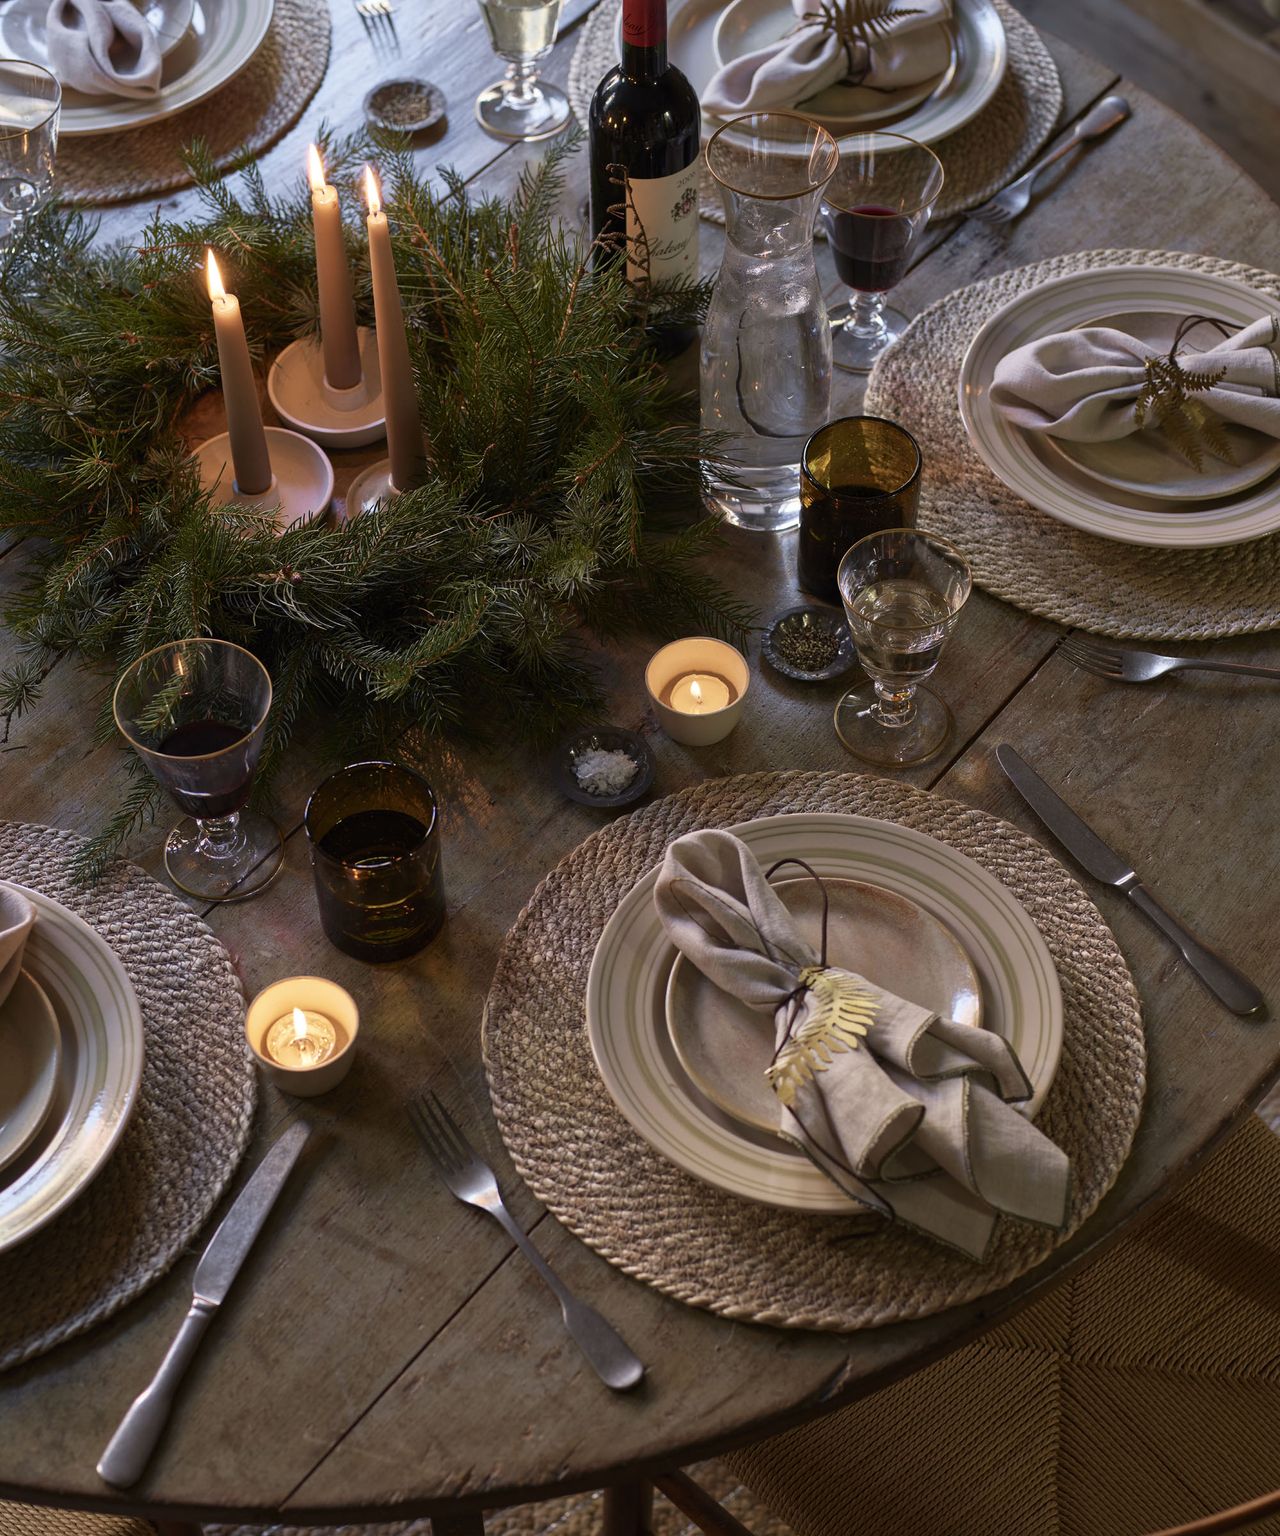 Thanksgiving centerpiece ideas: 15 festive table displays